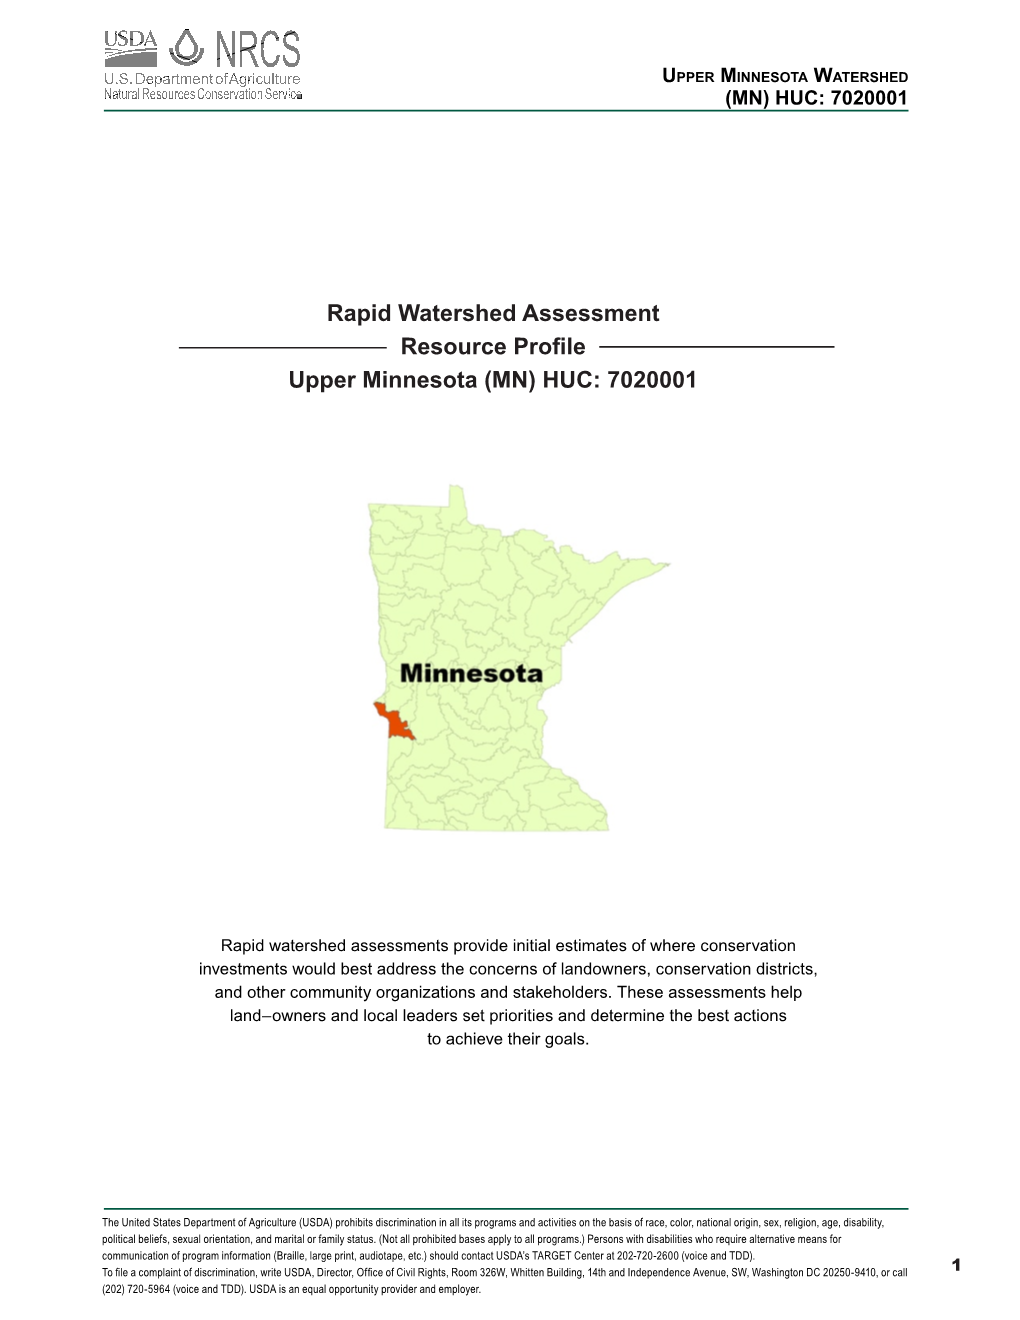 Rapid Watershed Assessment Resource Profile Upper Minnesota (MN) HUC: 7020001